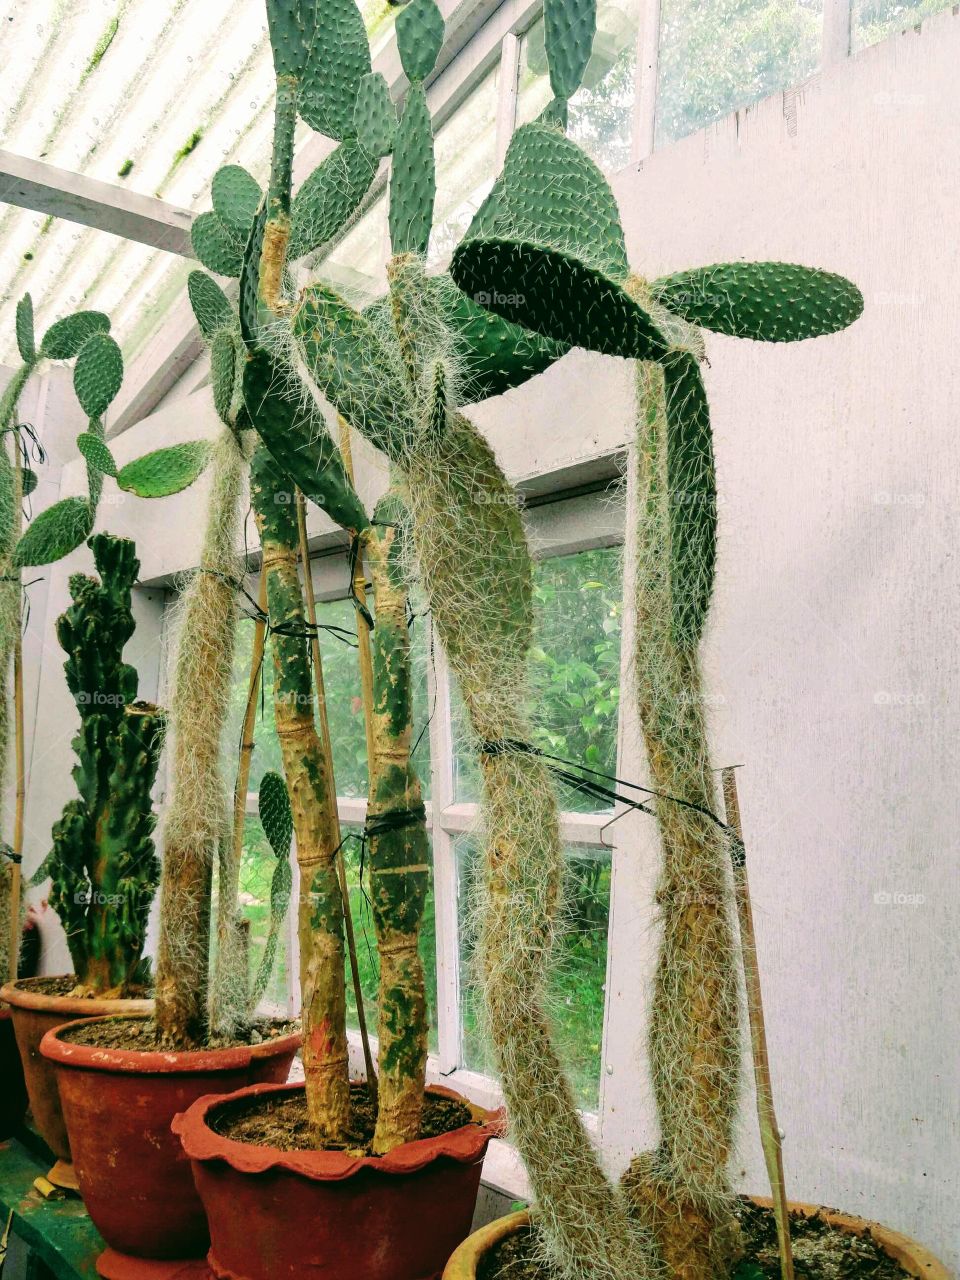 Cactus as houseplant. Decorative